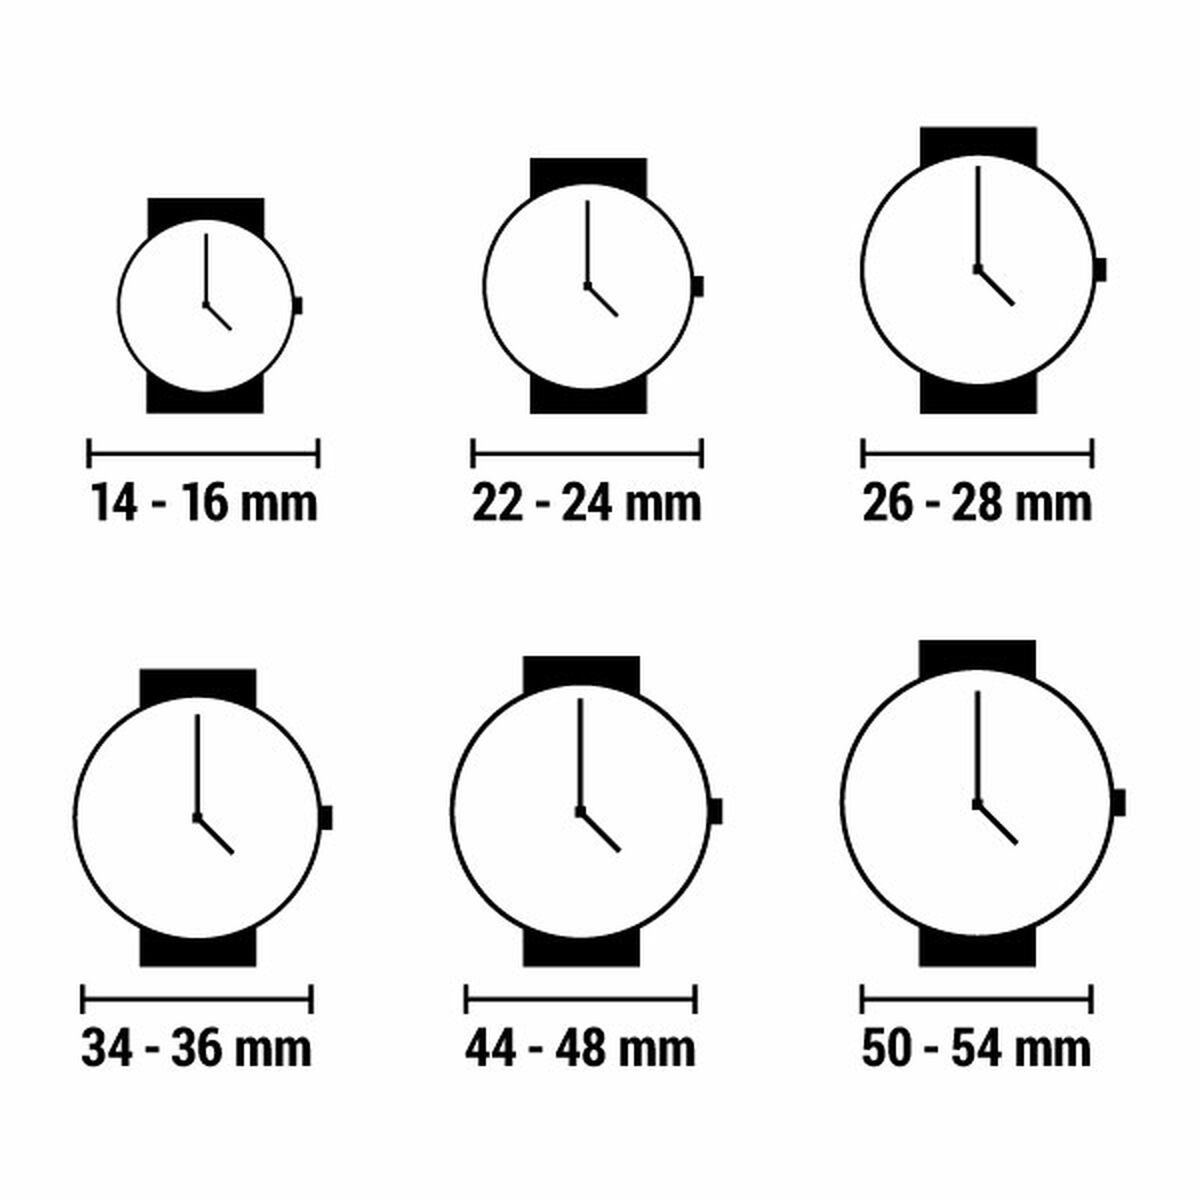 Horloge Dames Guess CRYSTAL CLEAR (Ø 33 mm)